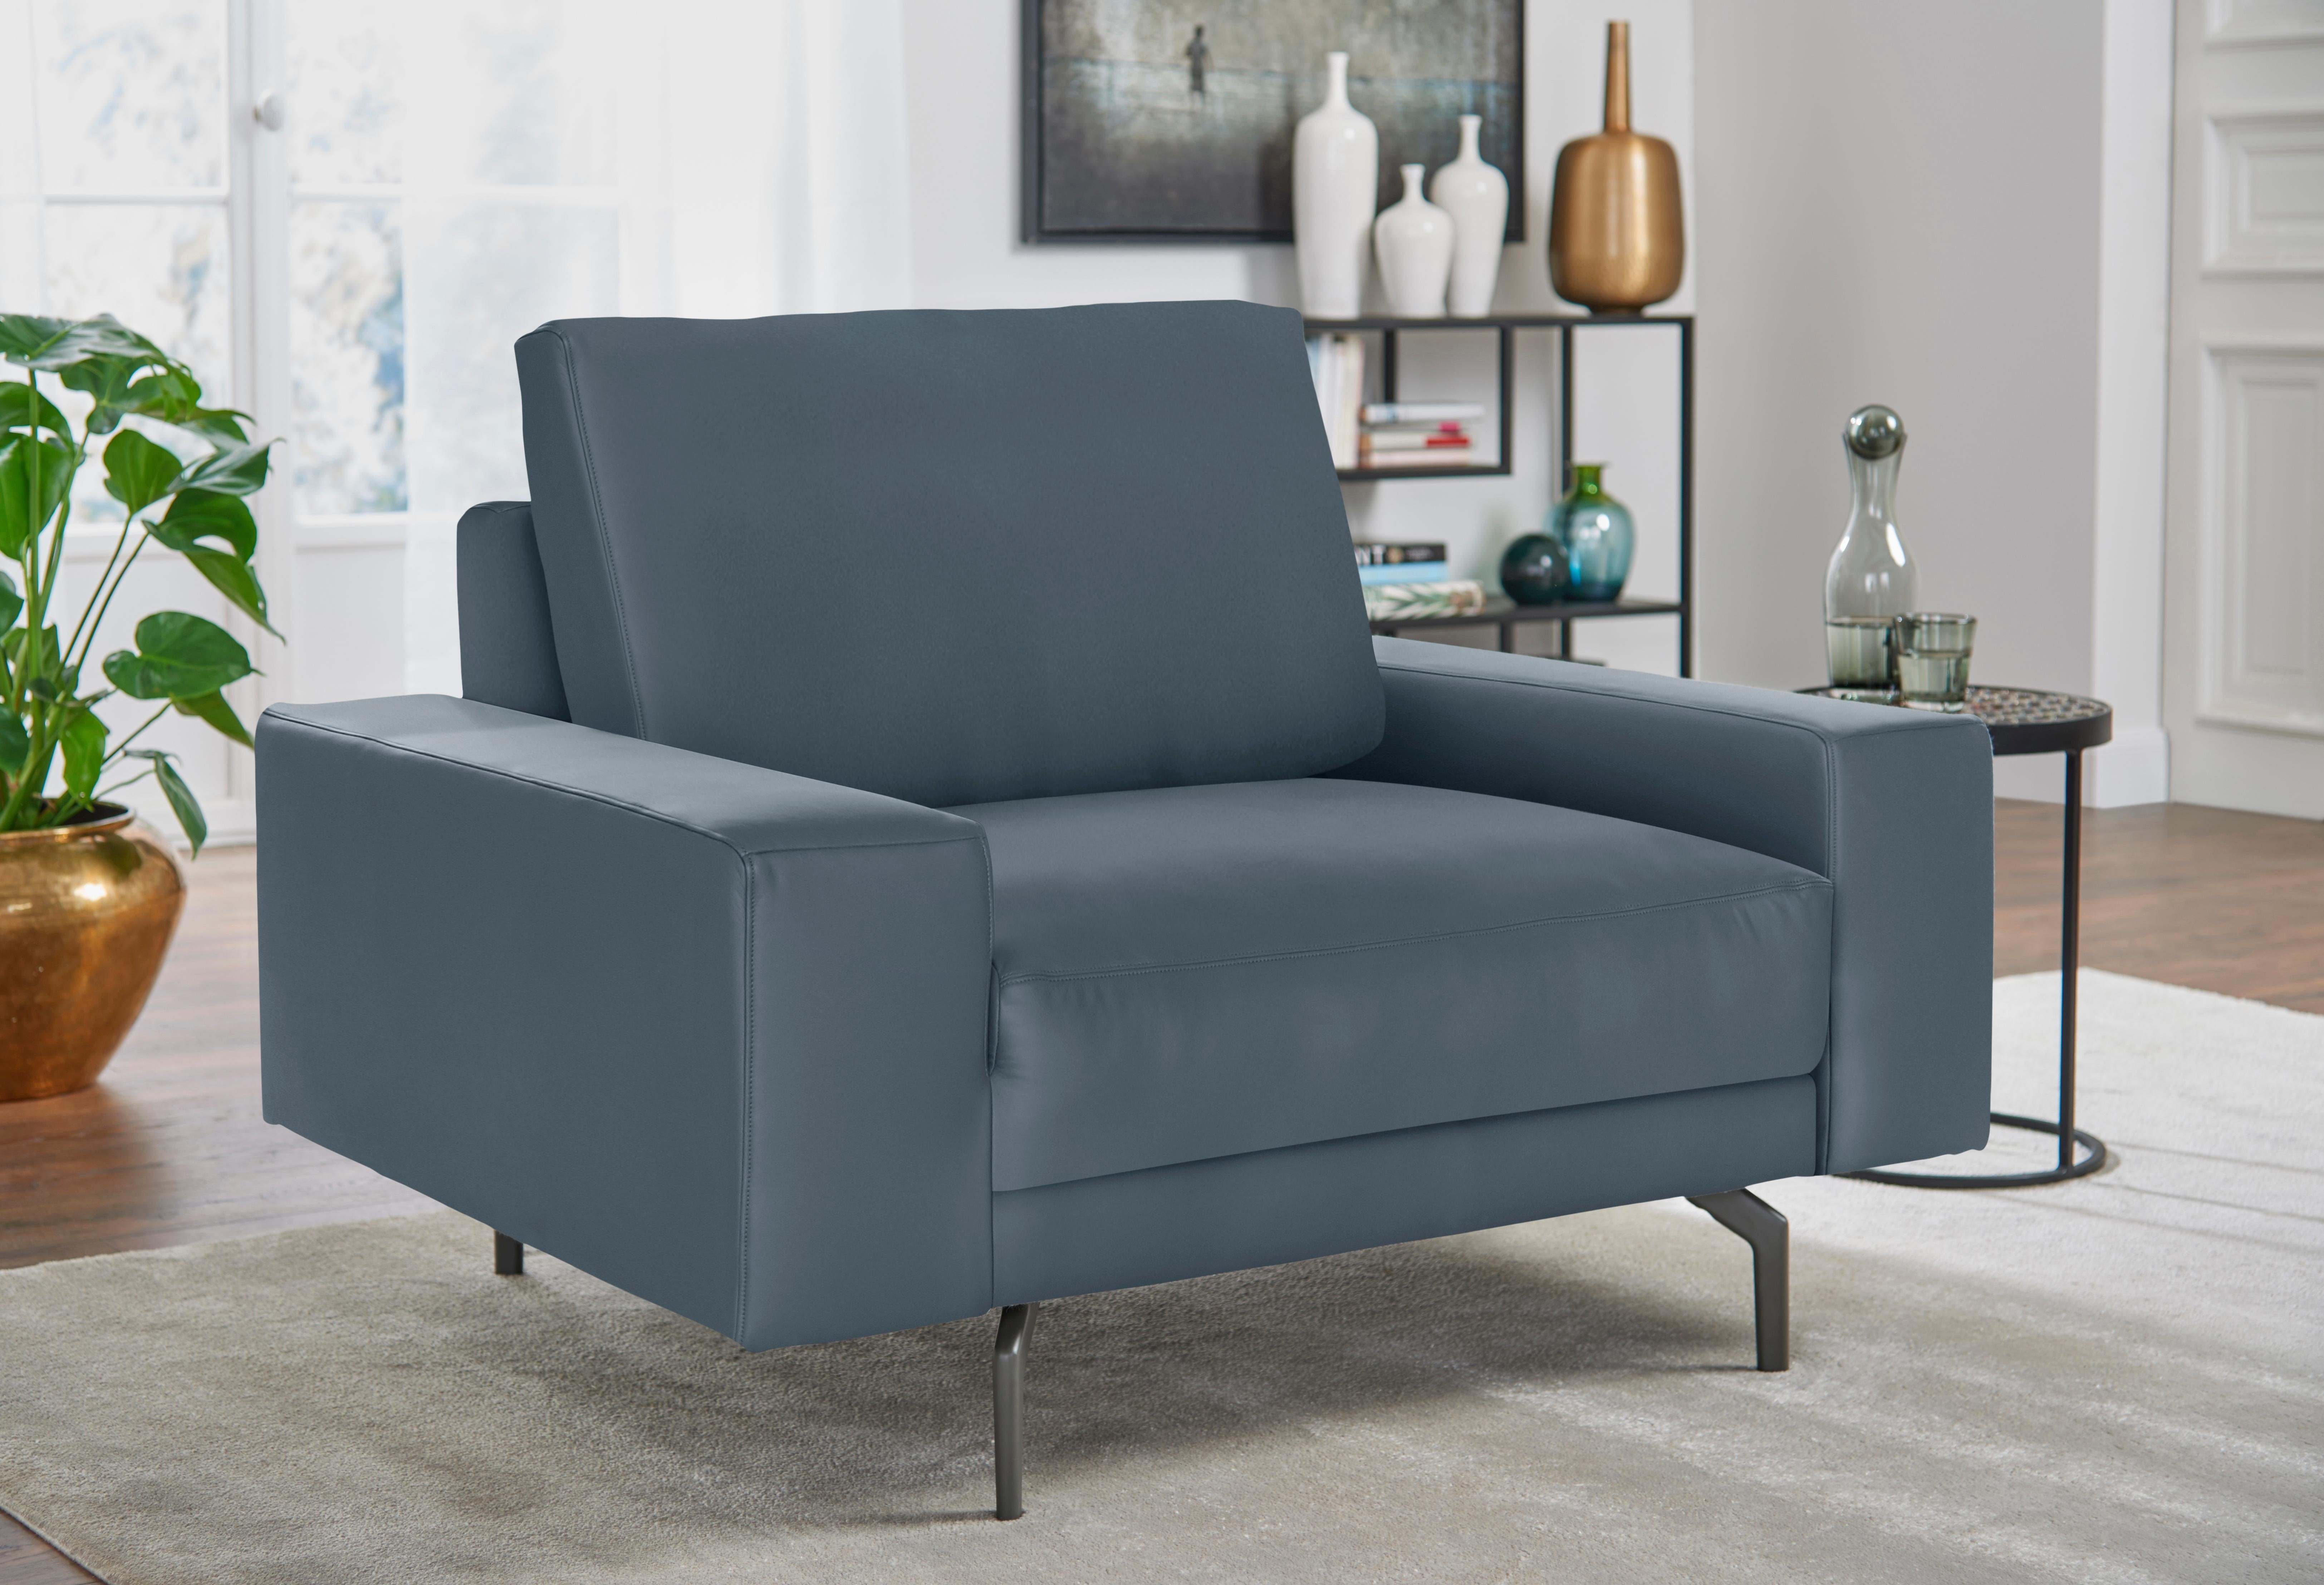 hülsta sofa Sessel hs.450, Armlehne breit niedrig, Alugussfüße in umbragrau, Breite 120 cm